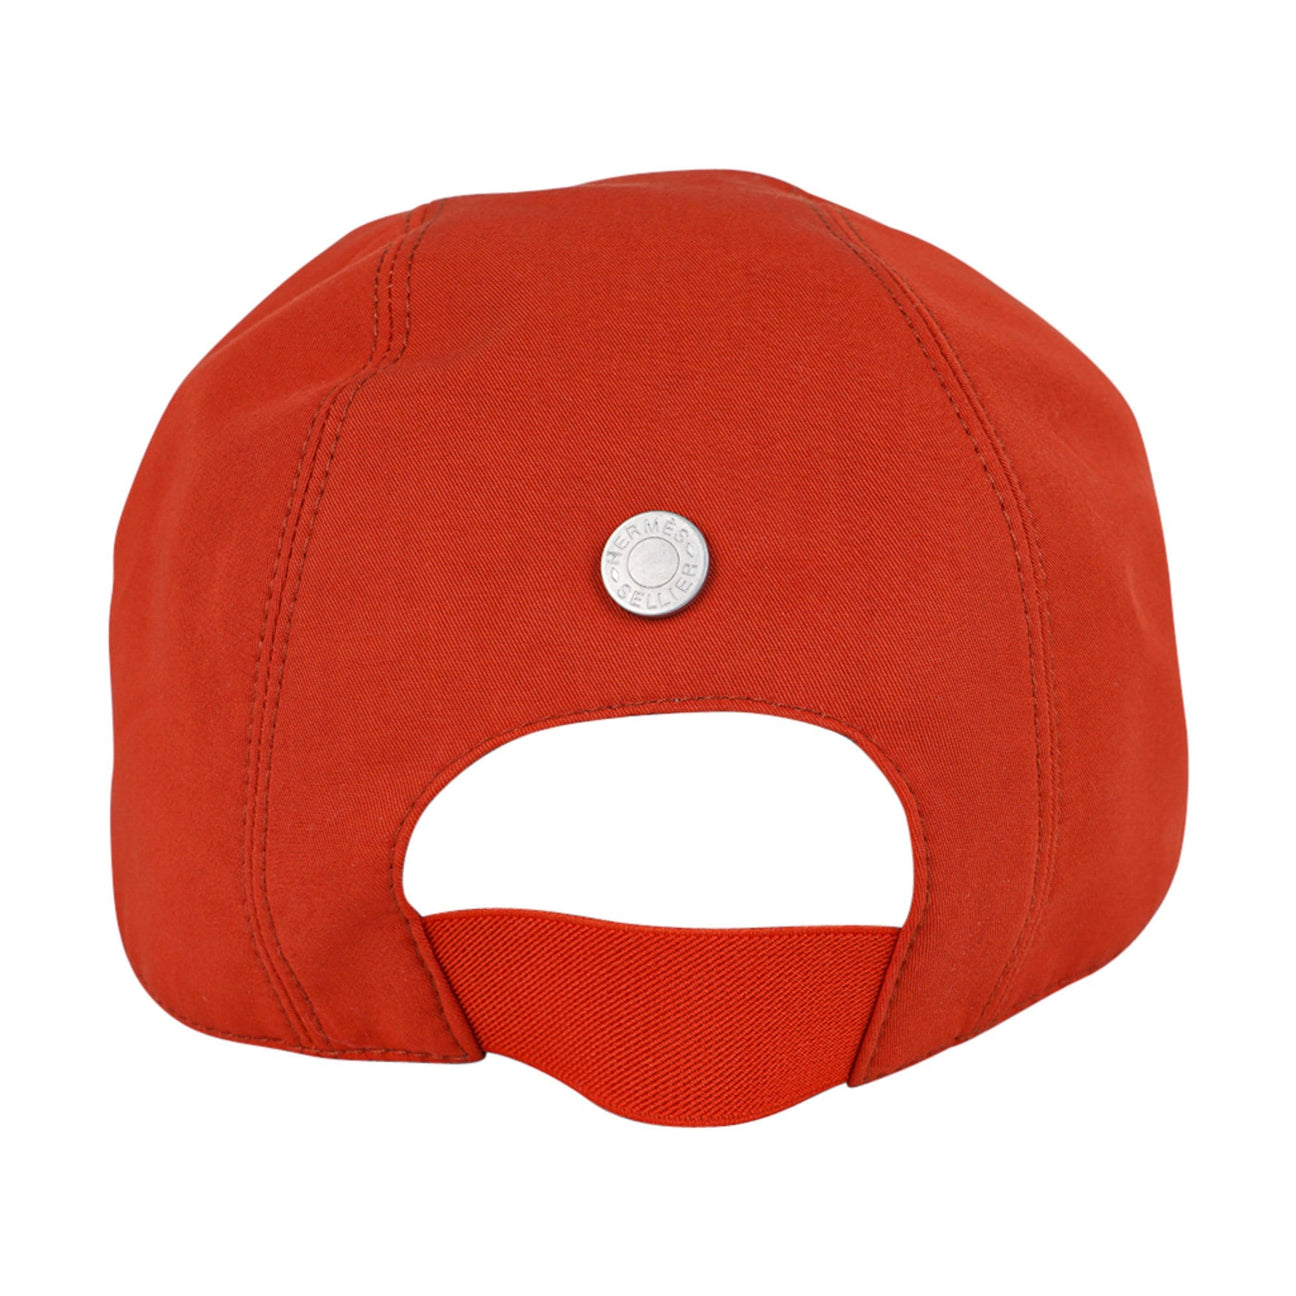 Hermes Men's Hat Paddock Equitation Cap Feu Cap 58 New – Mightychic